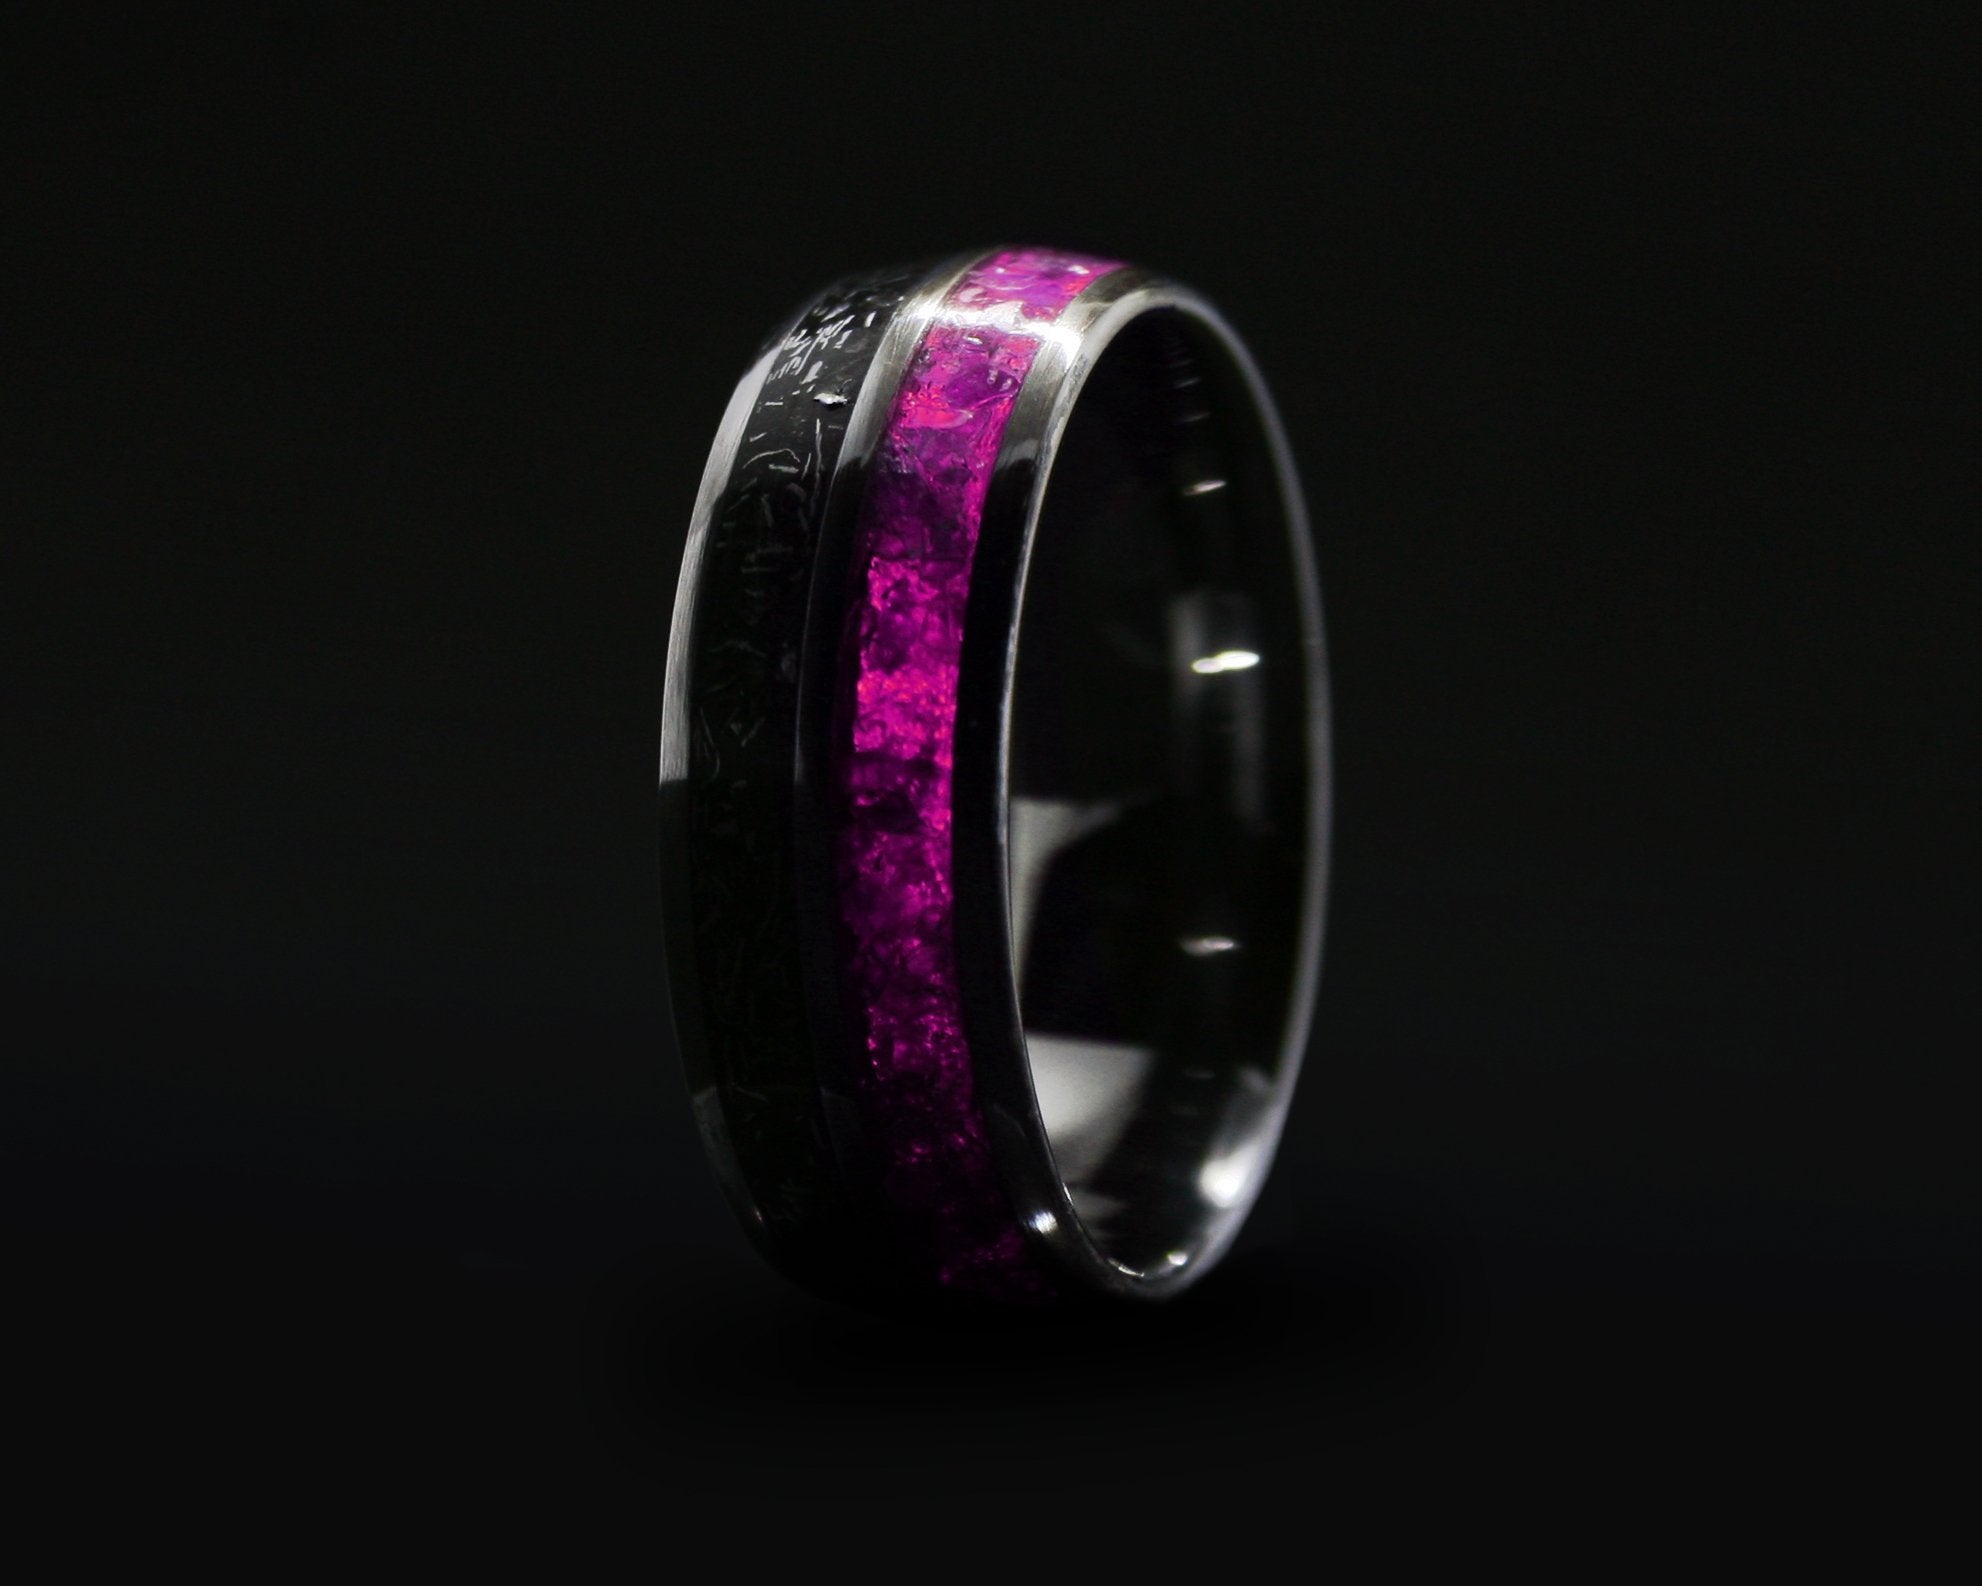 Luminous Glow Ring Glowing In The Dark Jewelry Rings For Women Men Black  New | eBay